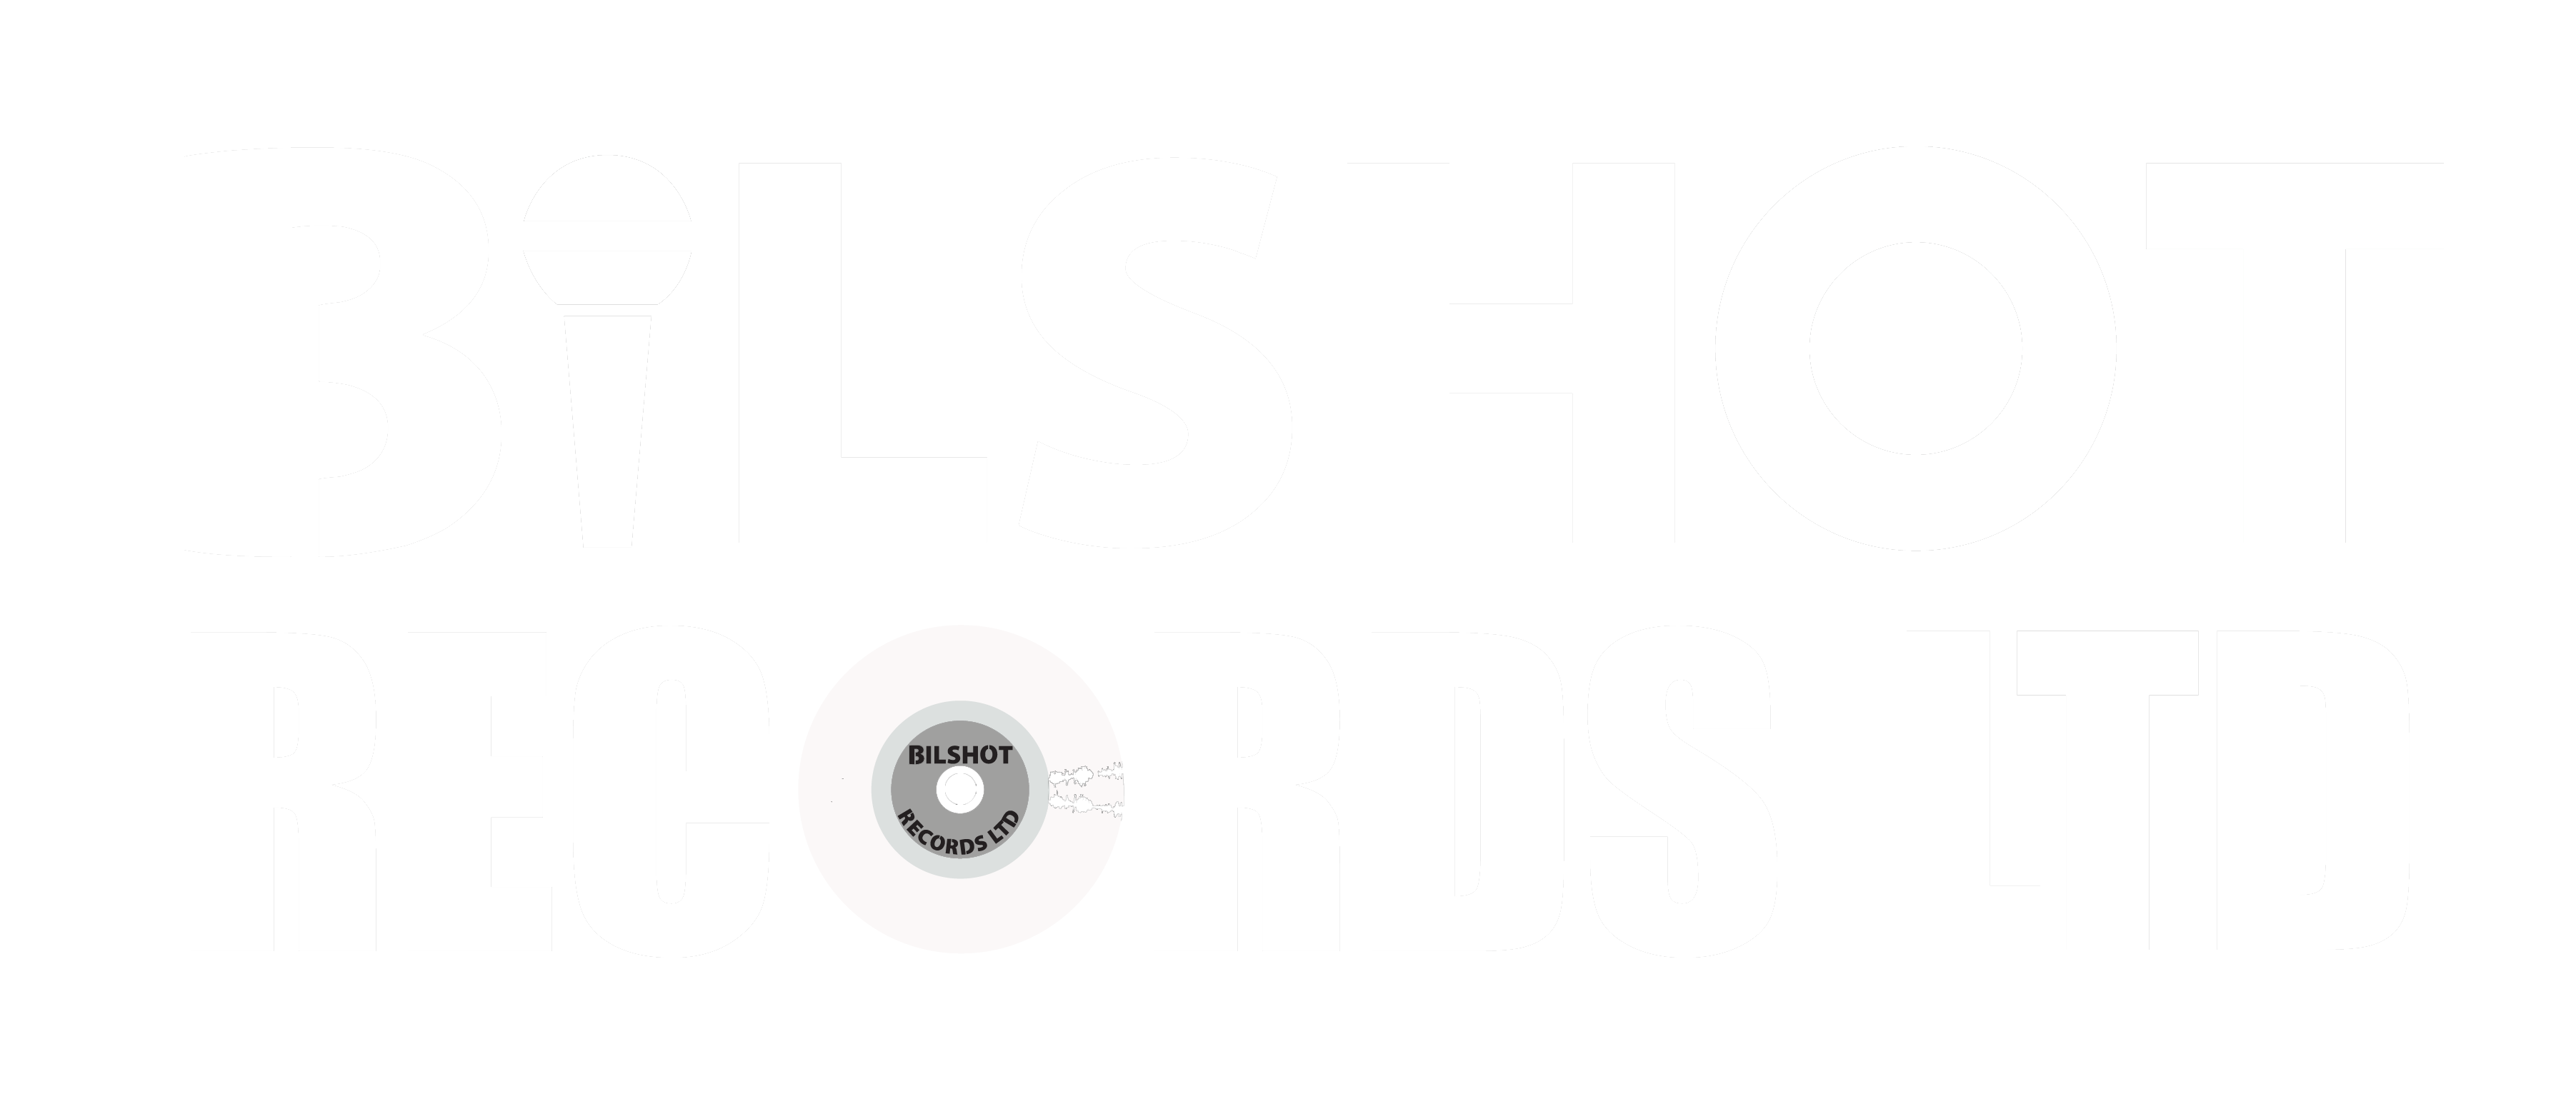 Bilshot Records Ltd